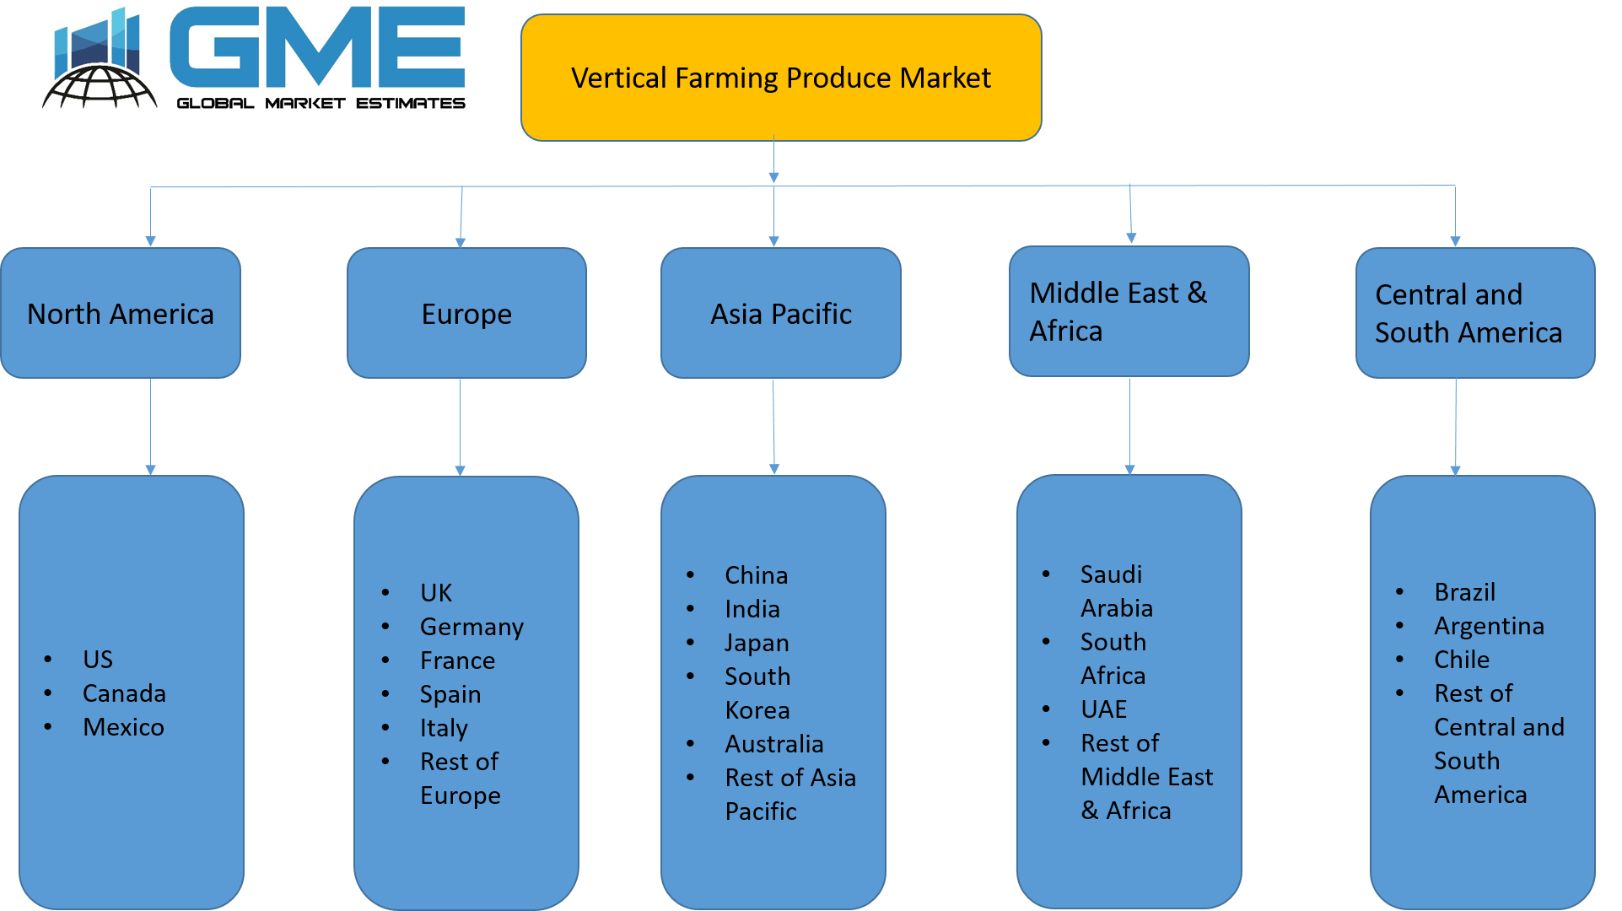 Global Vertical Farming Produce Market